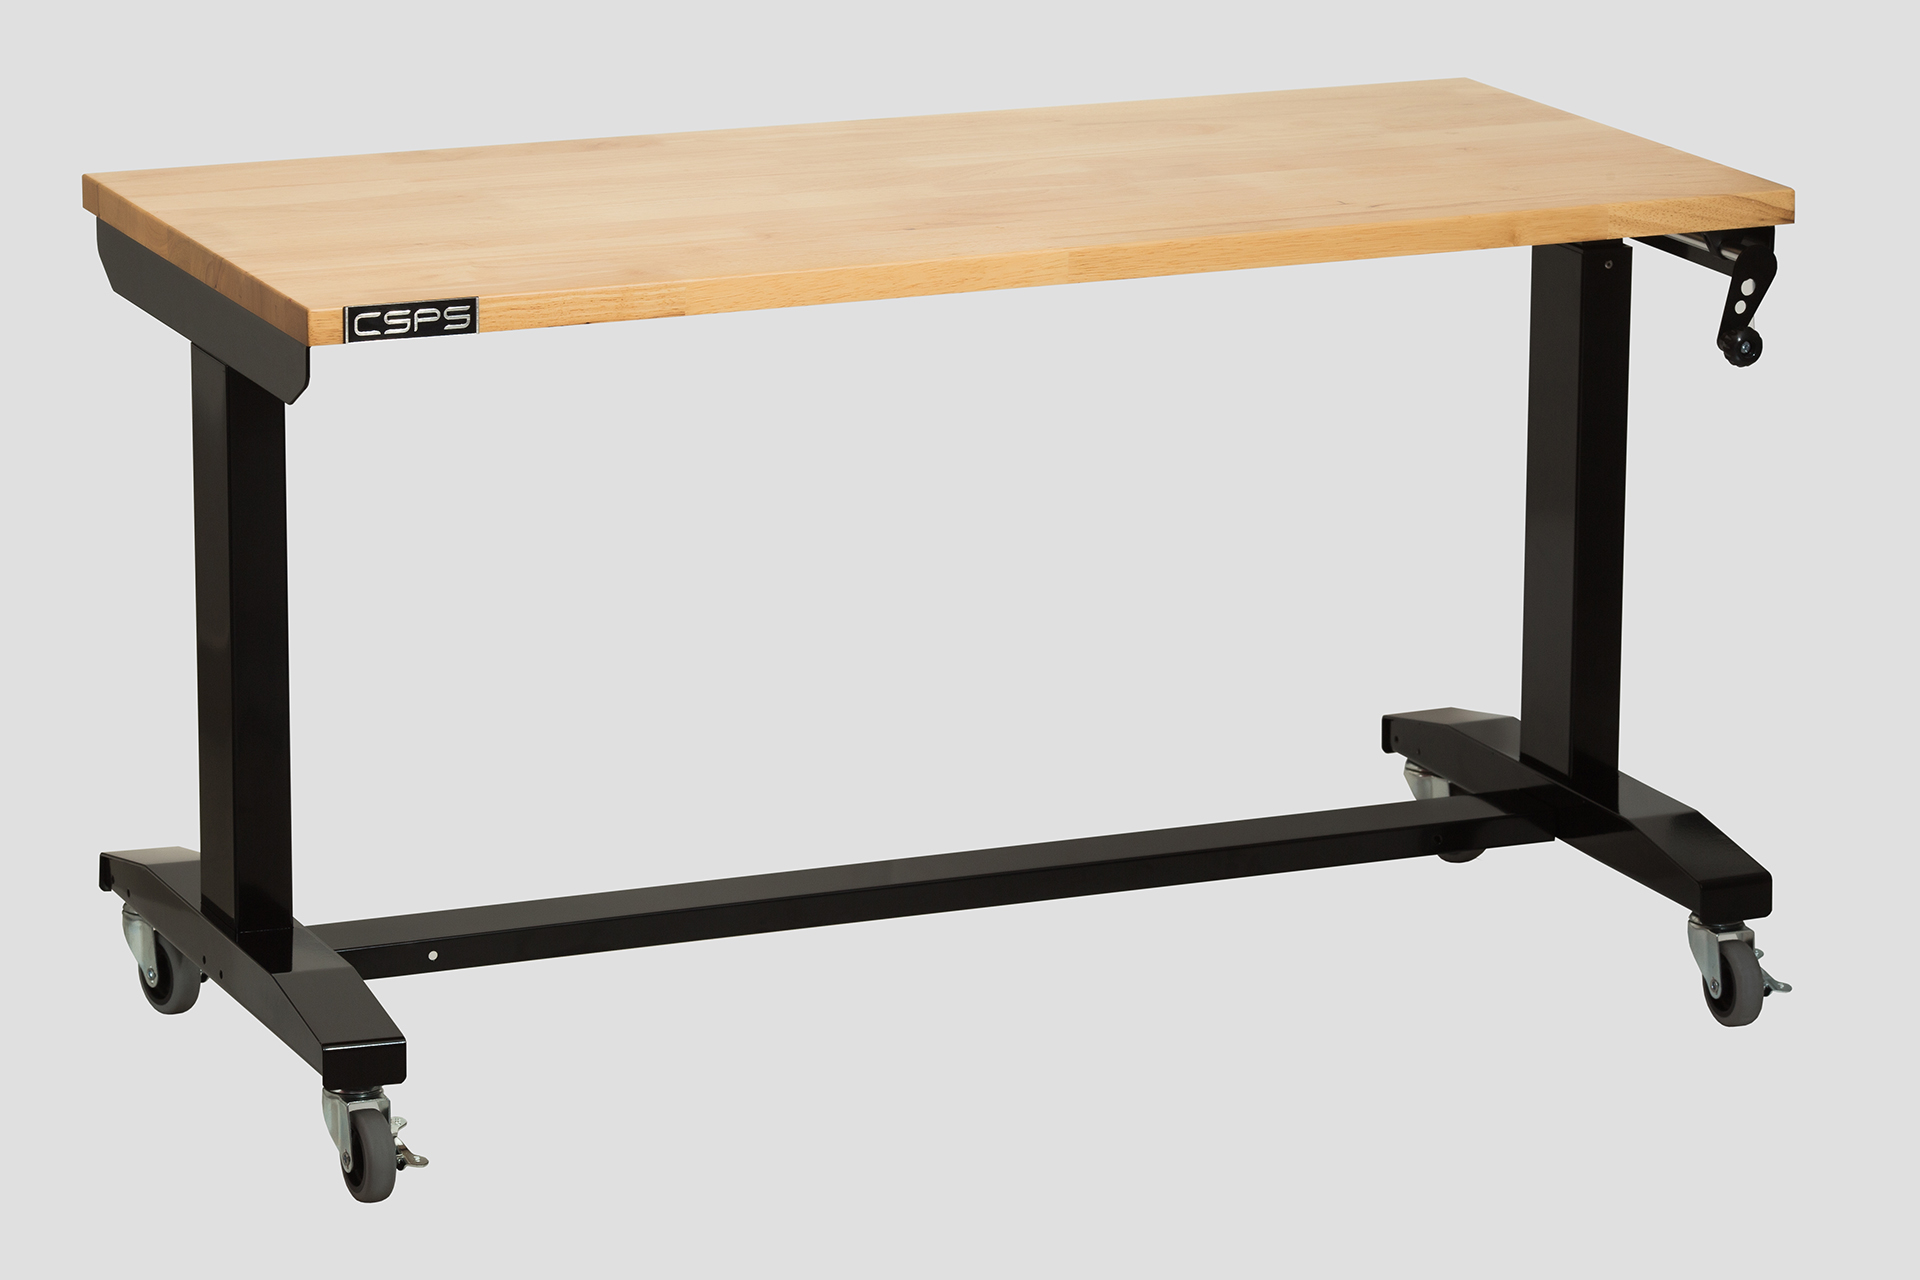 Adjustable table / CSPS CO., LTD.